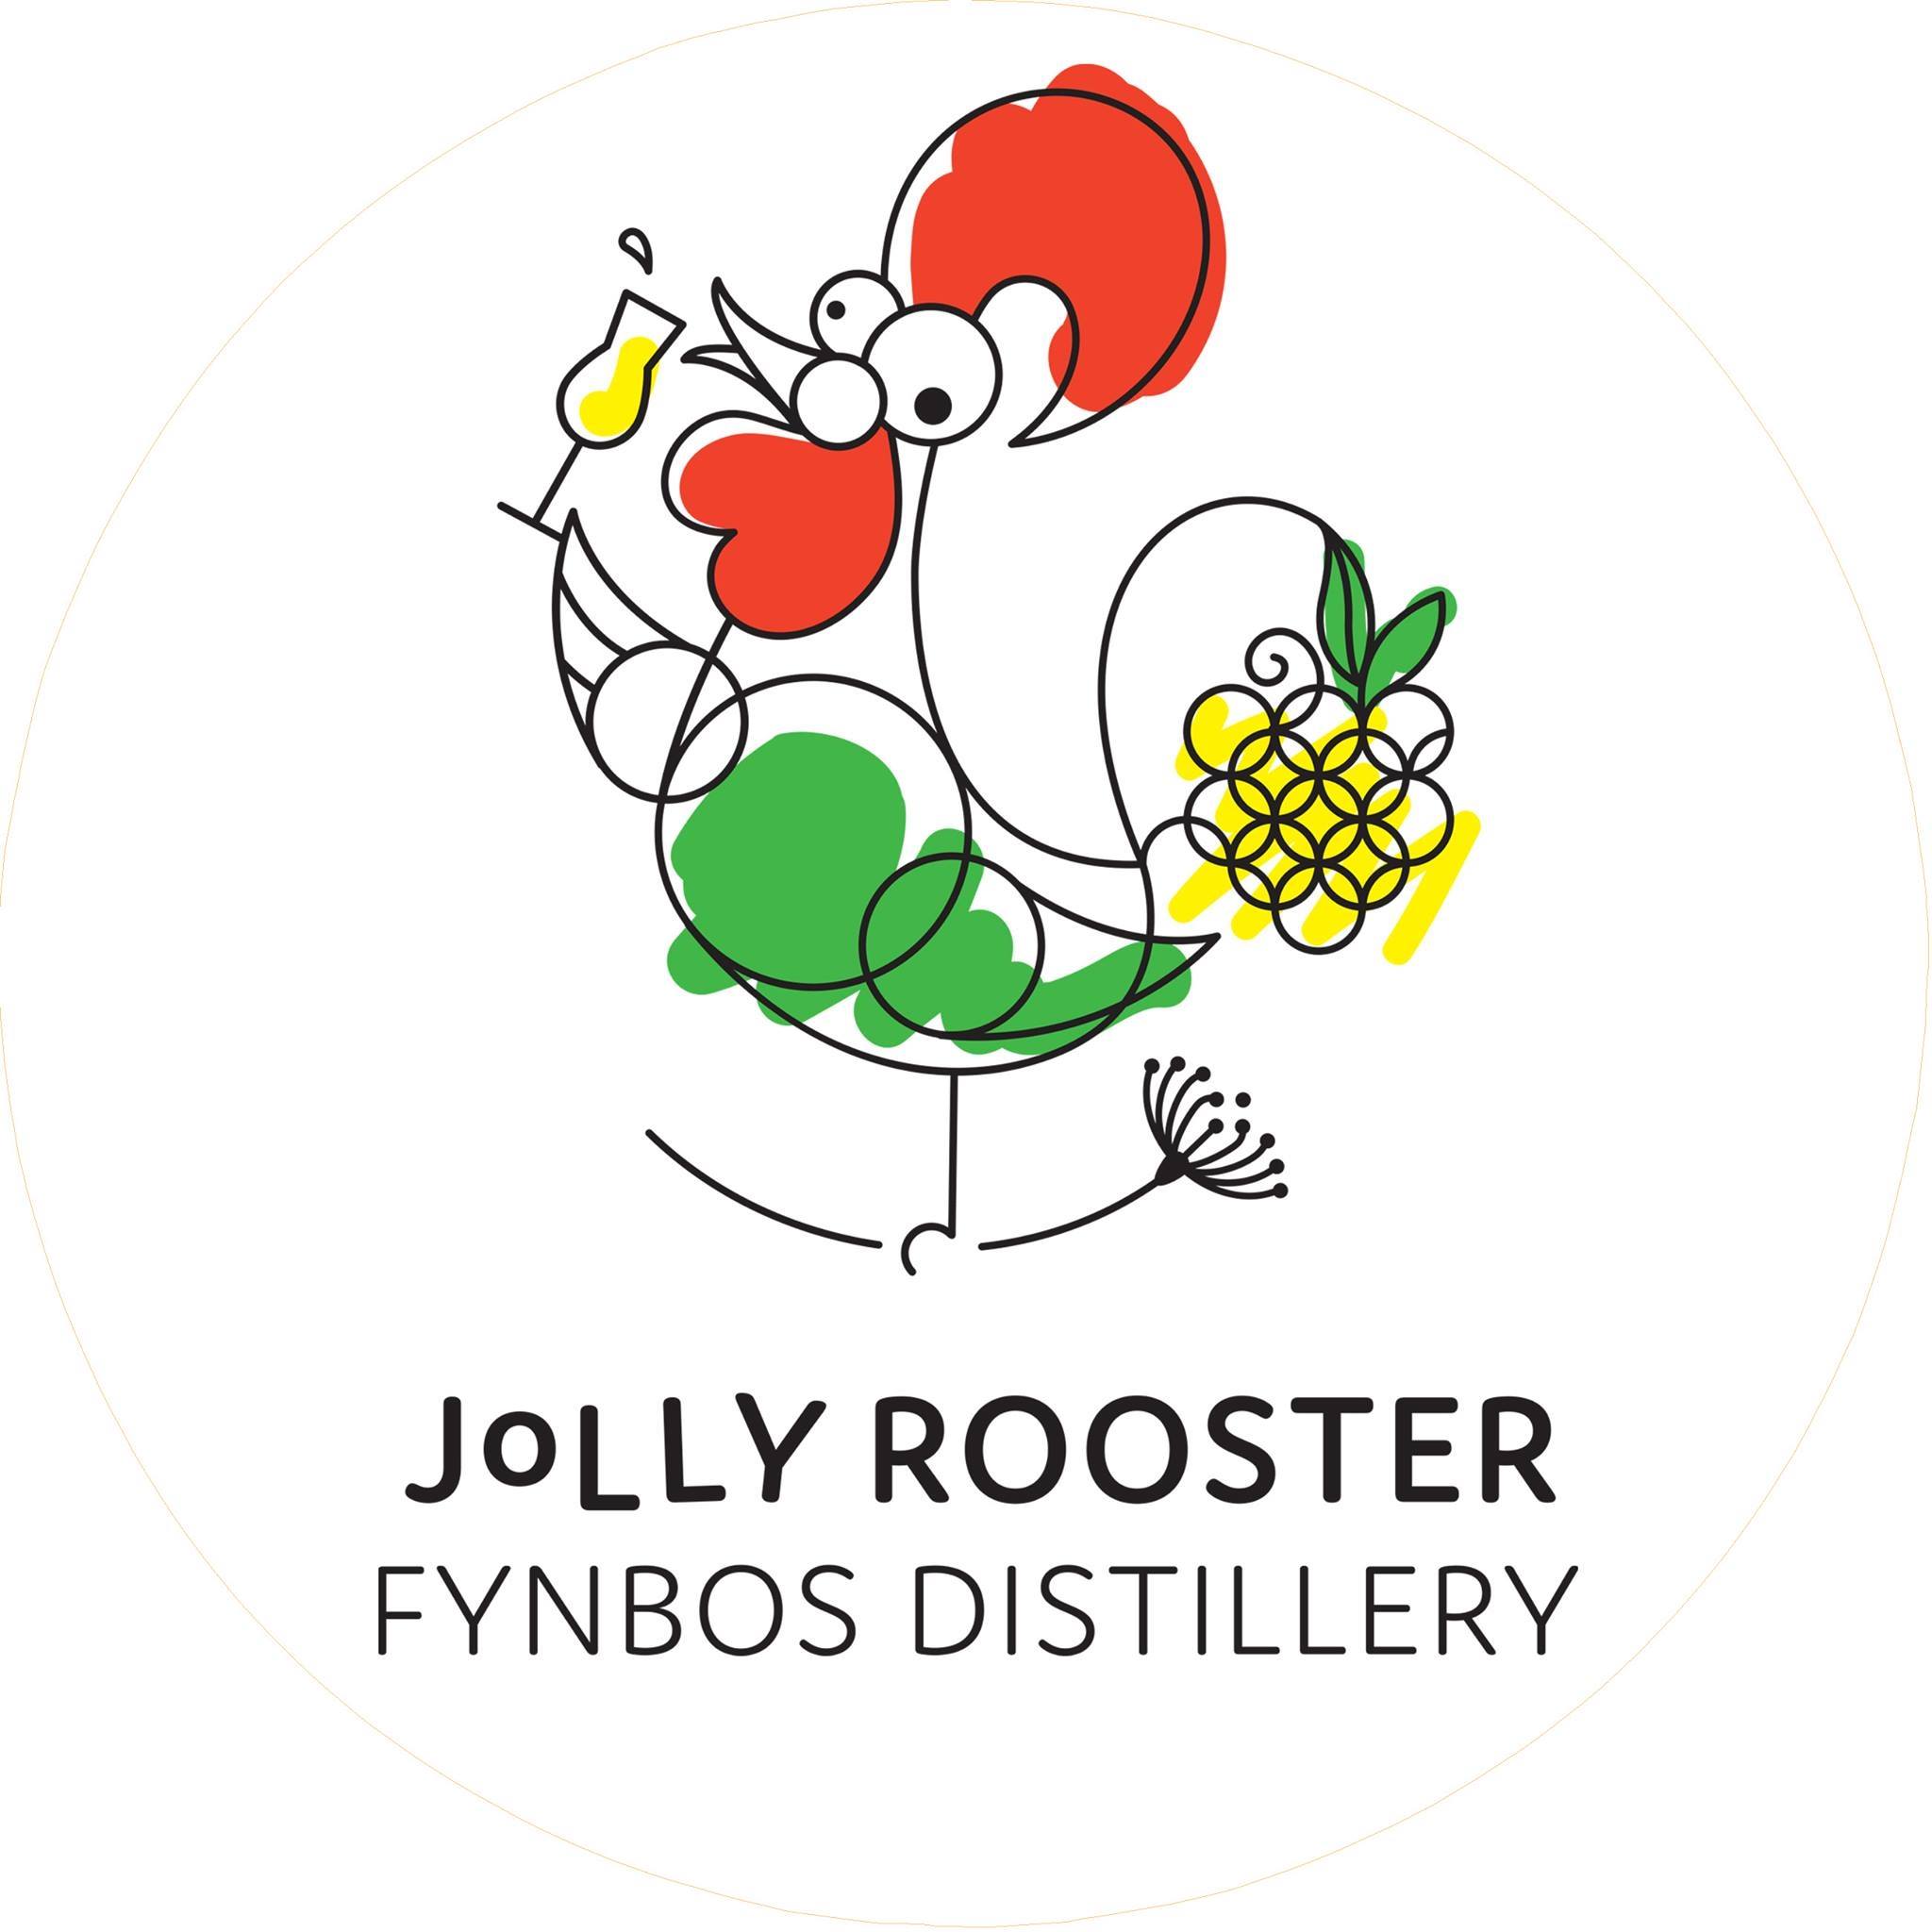 The Jolly Rooster @ Fynbos Distillery